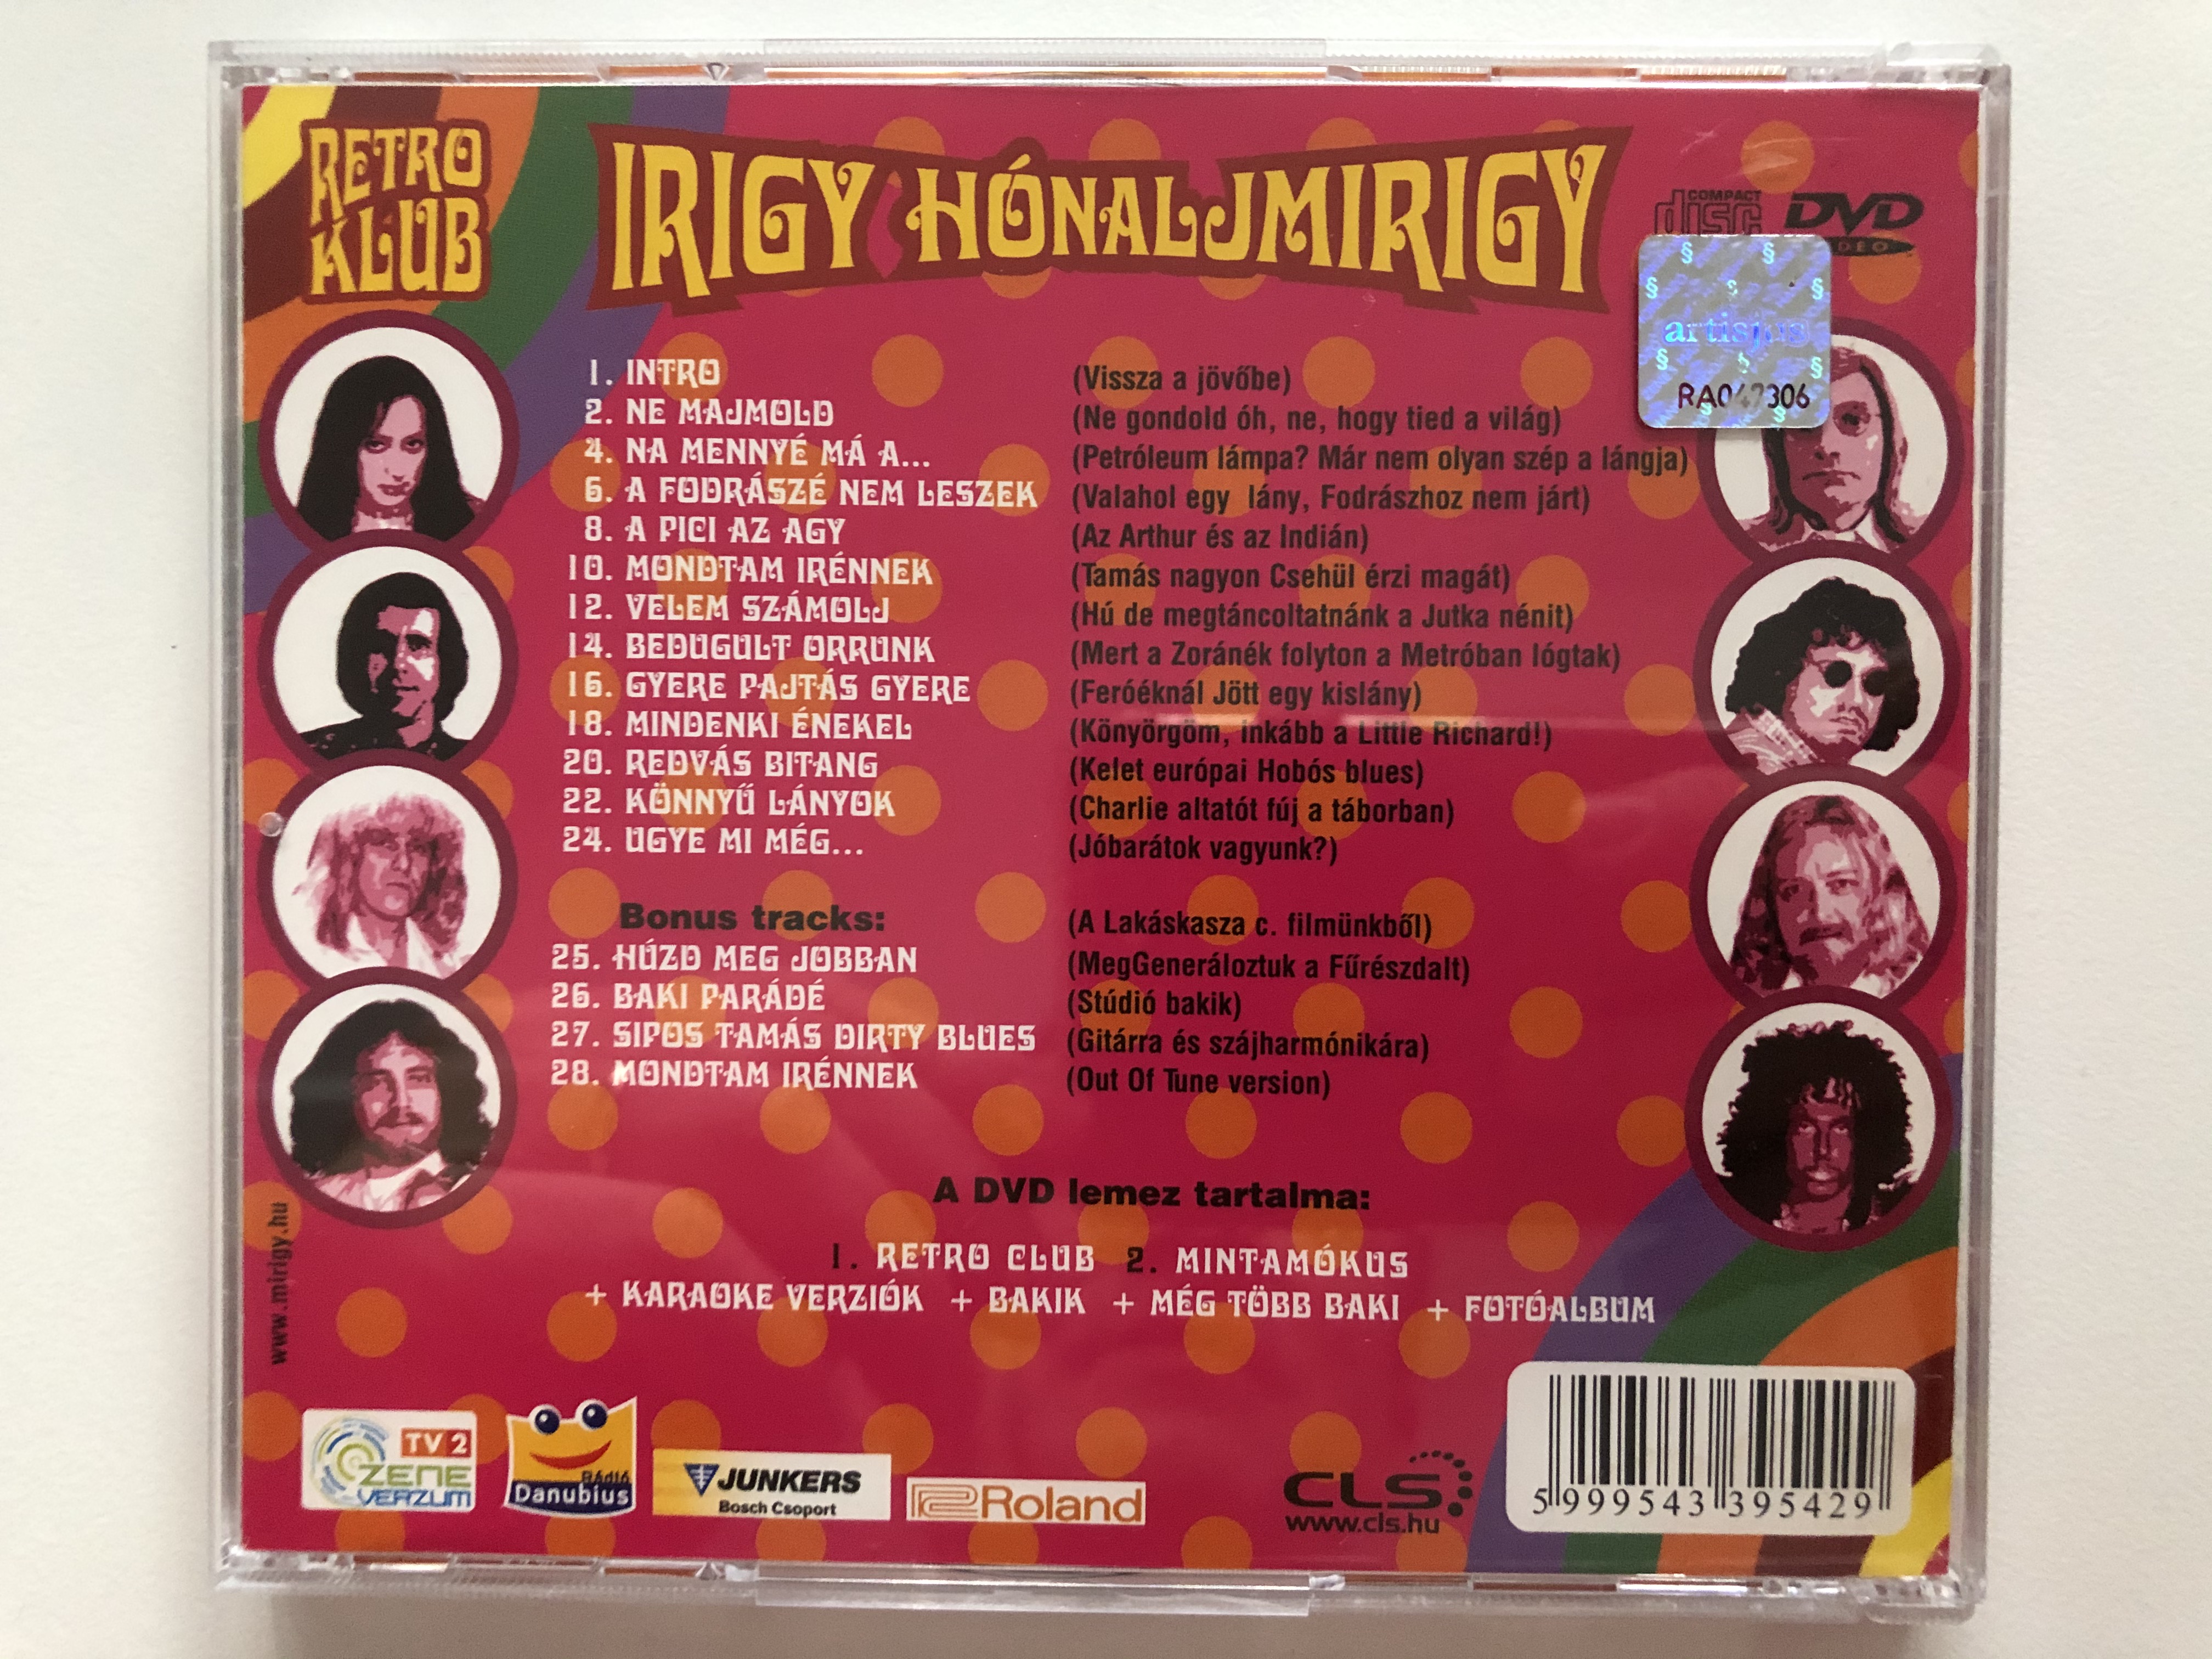 irigy-h-naljmirigy-retro-klub-ajandek-dvd-cls-records-audio-cd-dvd-cd-cls-sa0542-8-.jpg